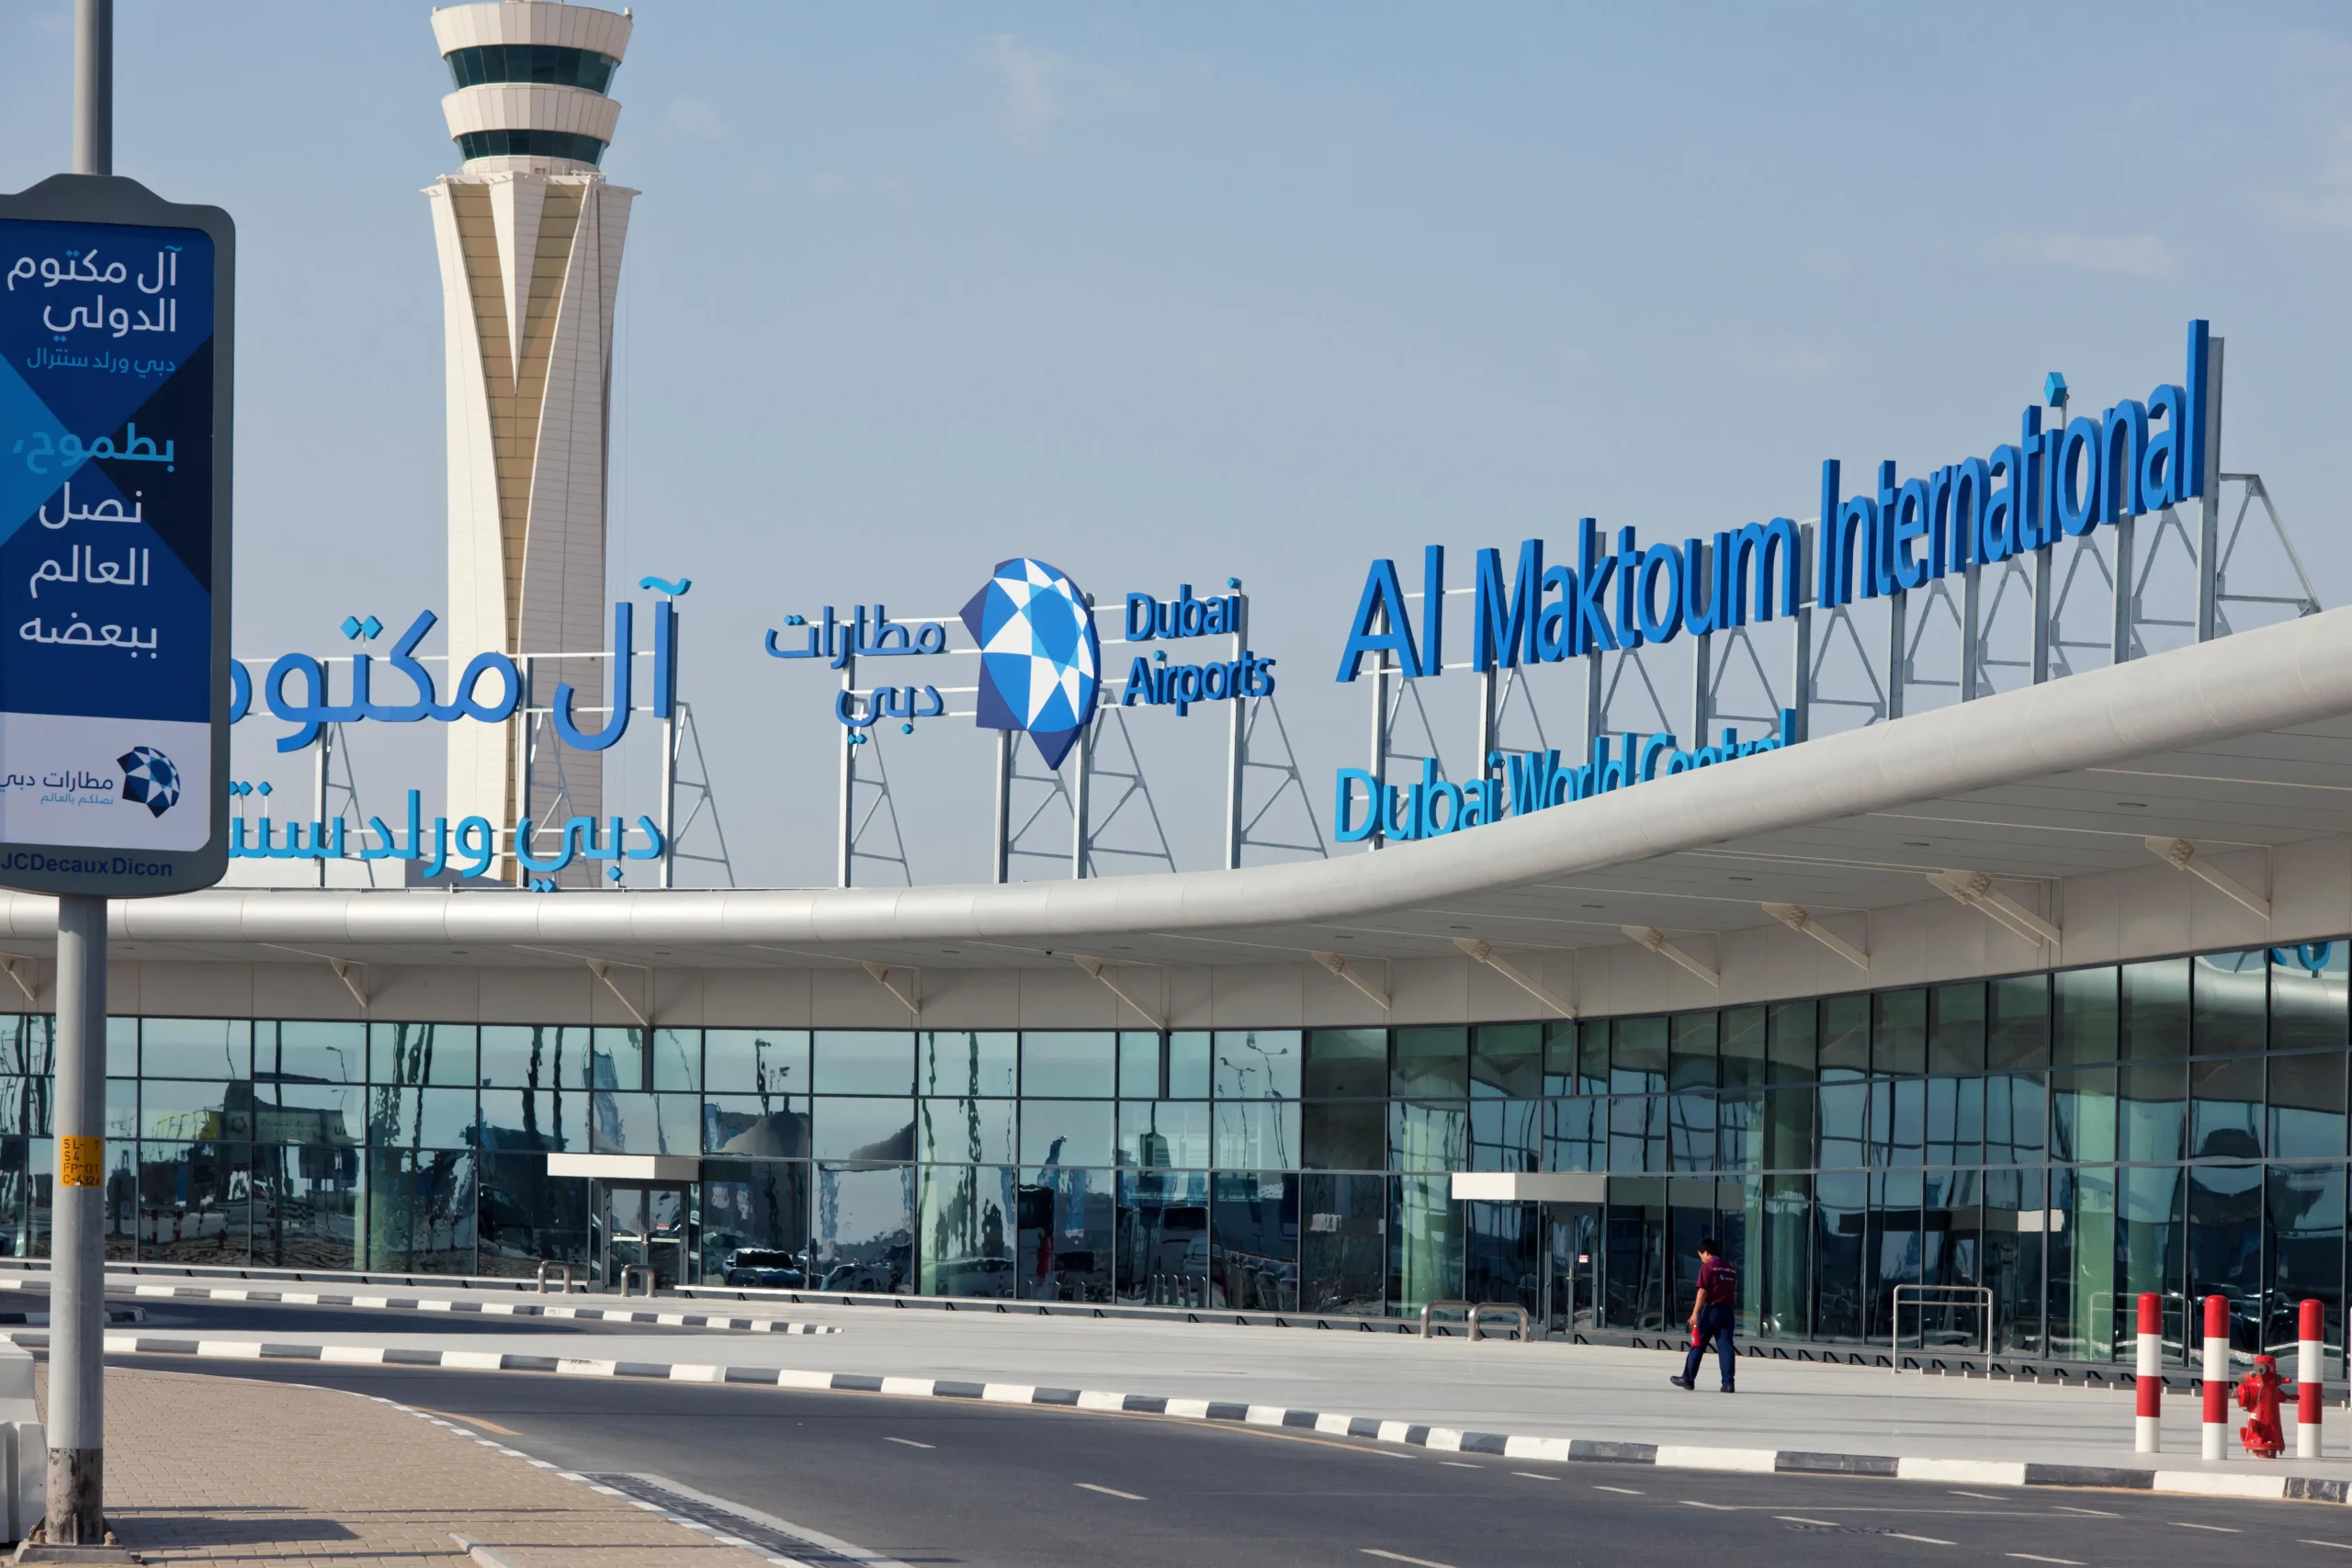 Dubai to build world’s biggest airport terminal